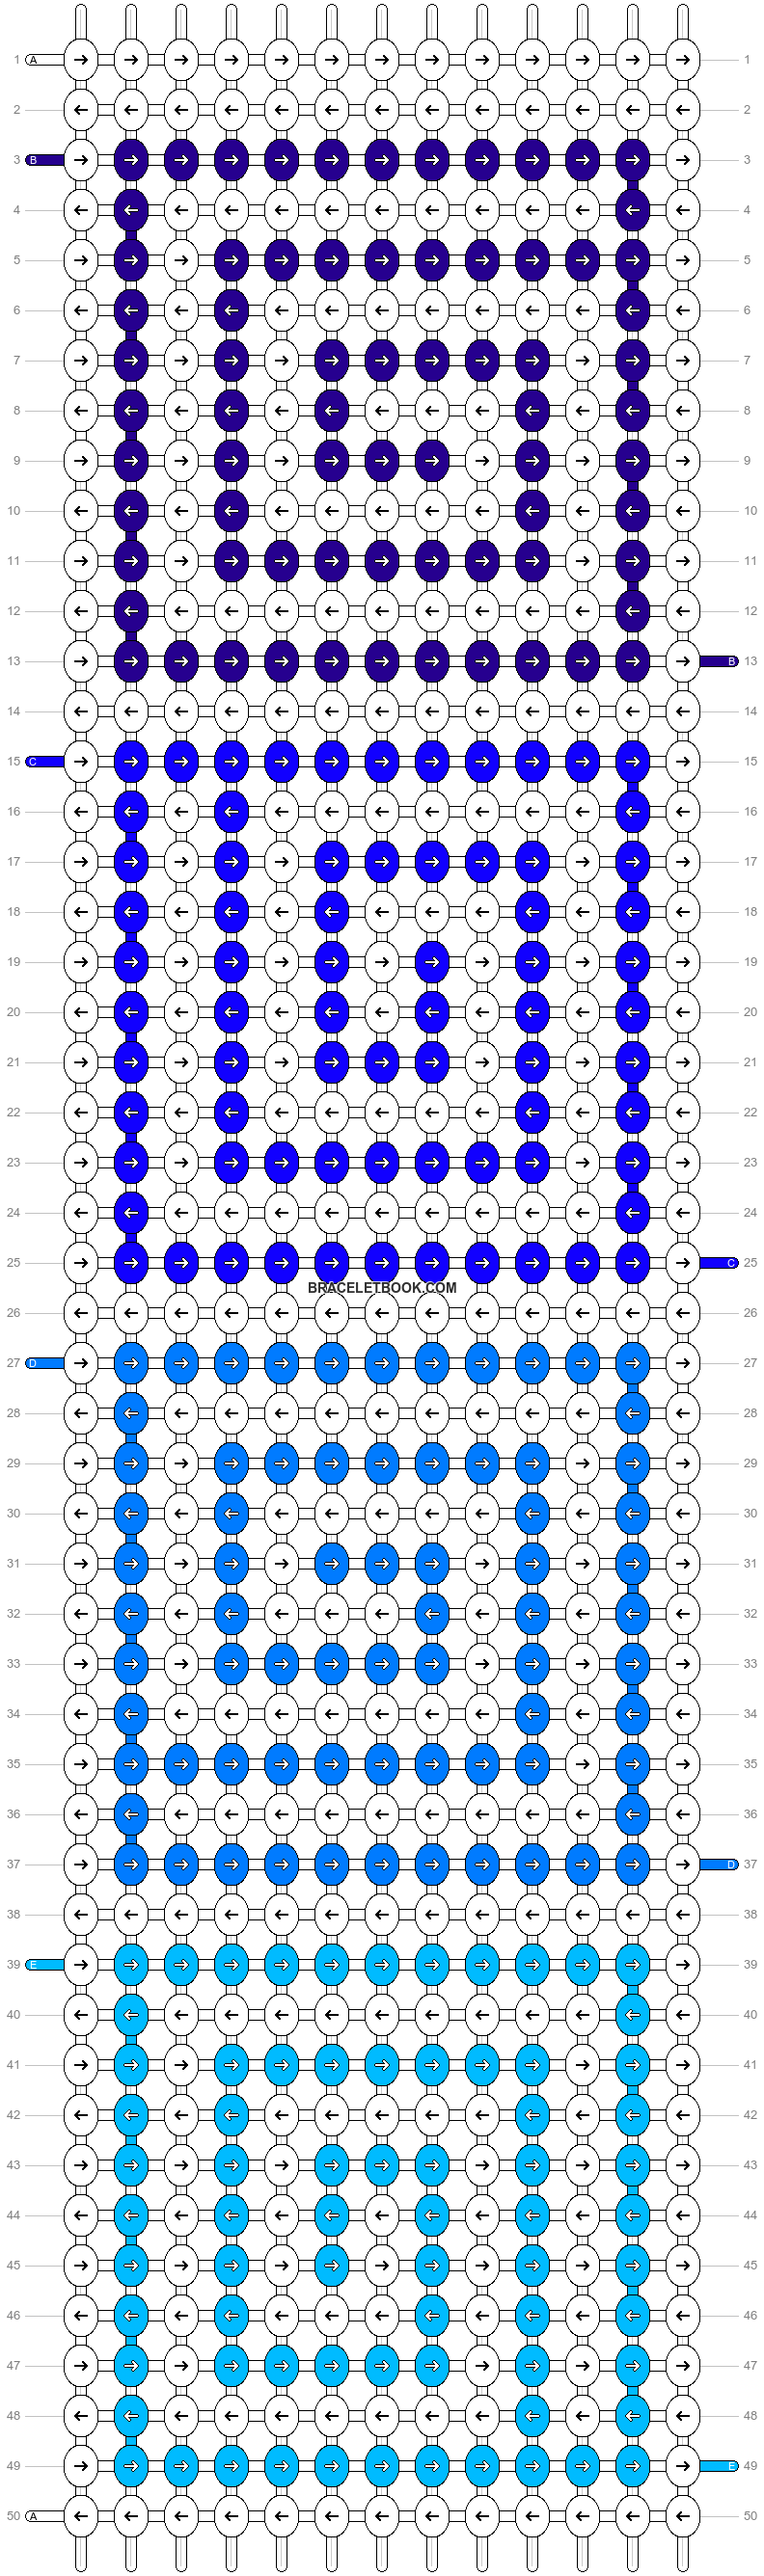 Alpha pattern #53852 pattern